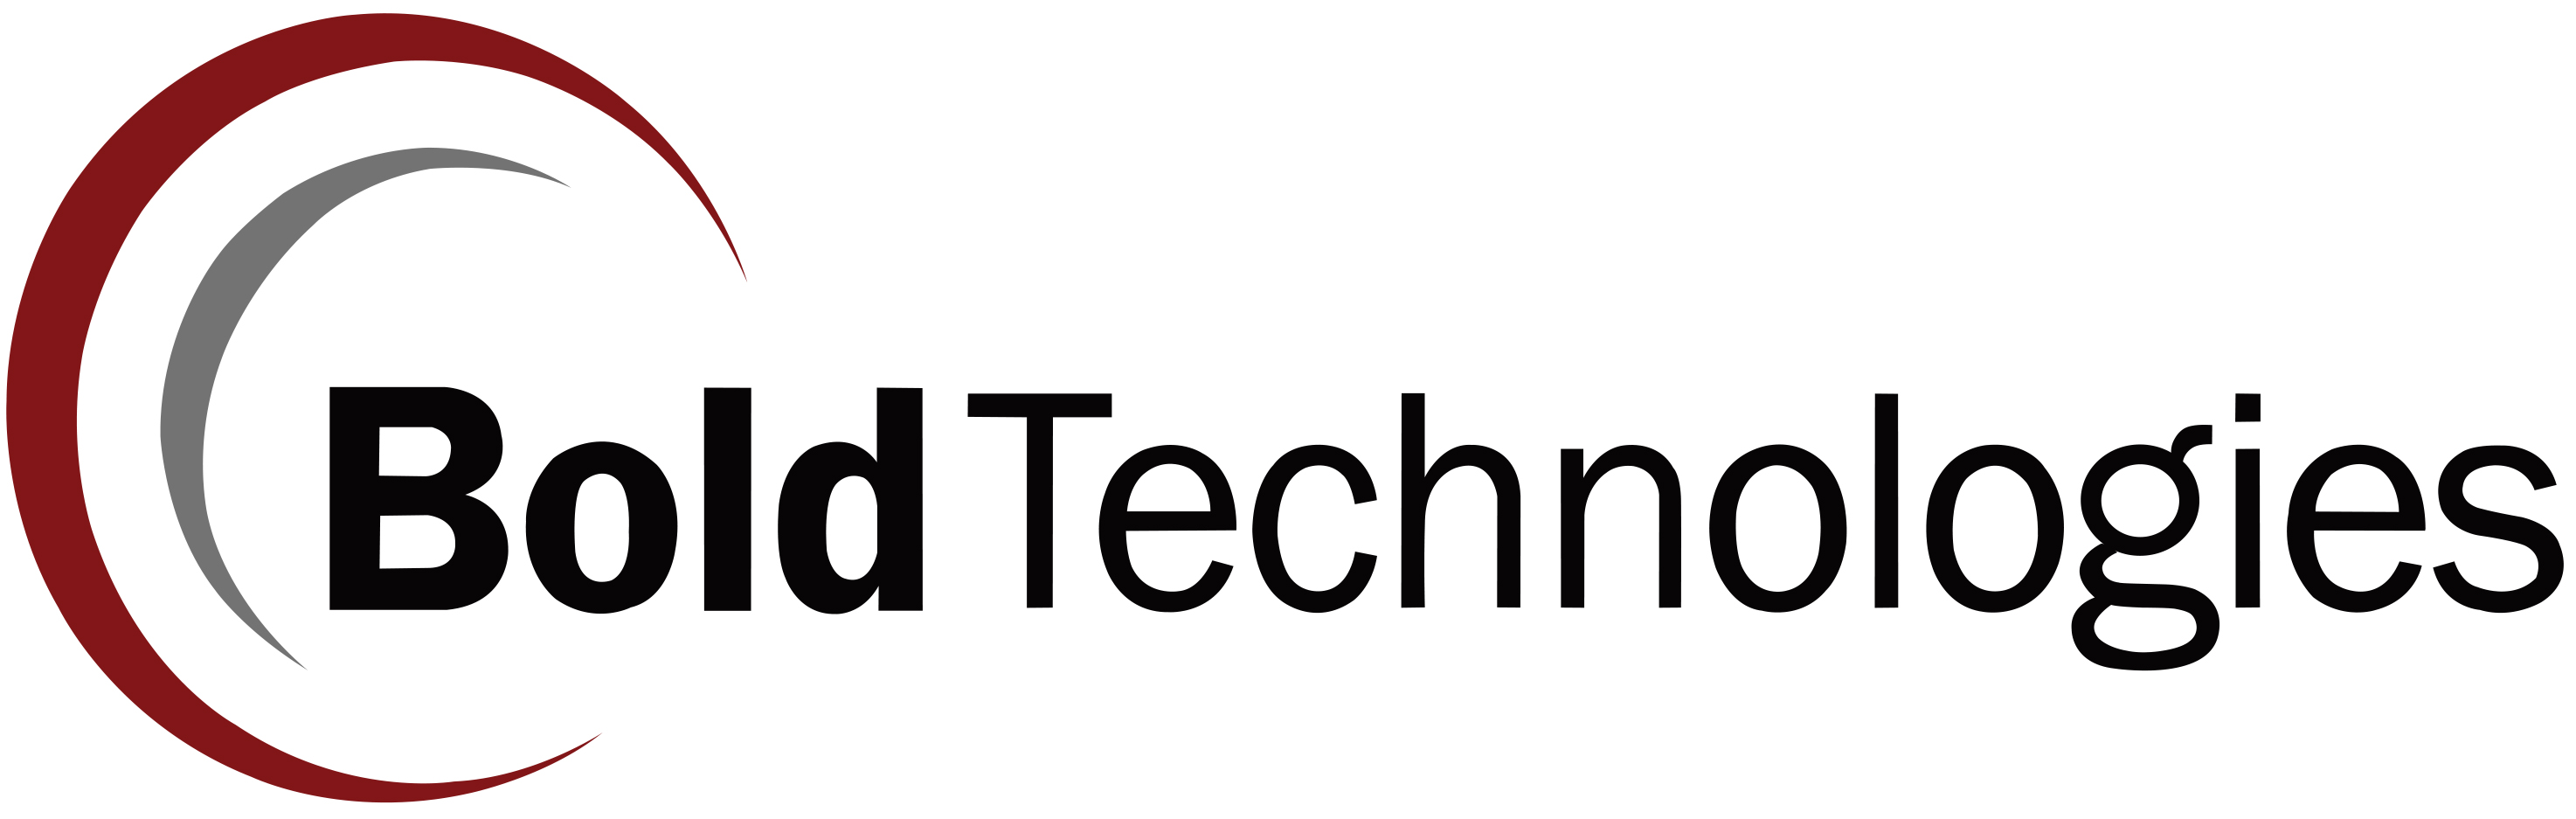 Bold-Technologies Logo no atmosphere